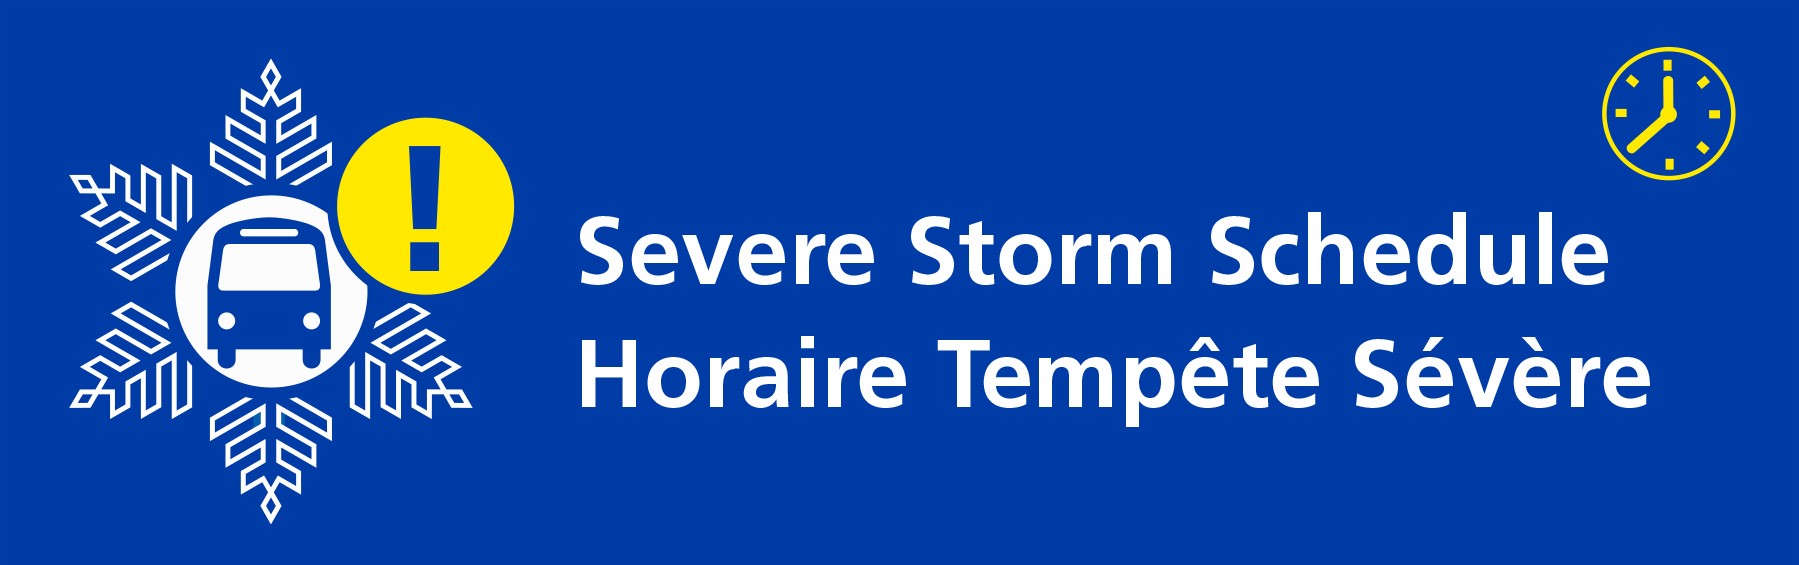 Severe Storm Schedule logo